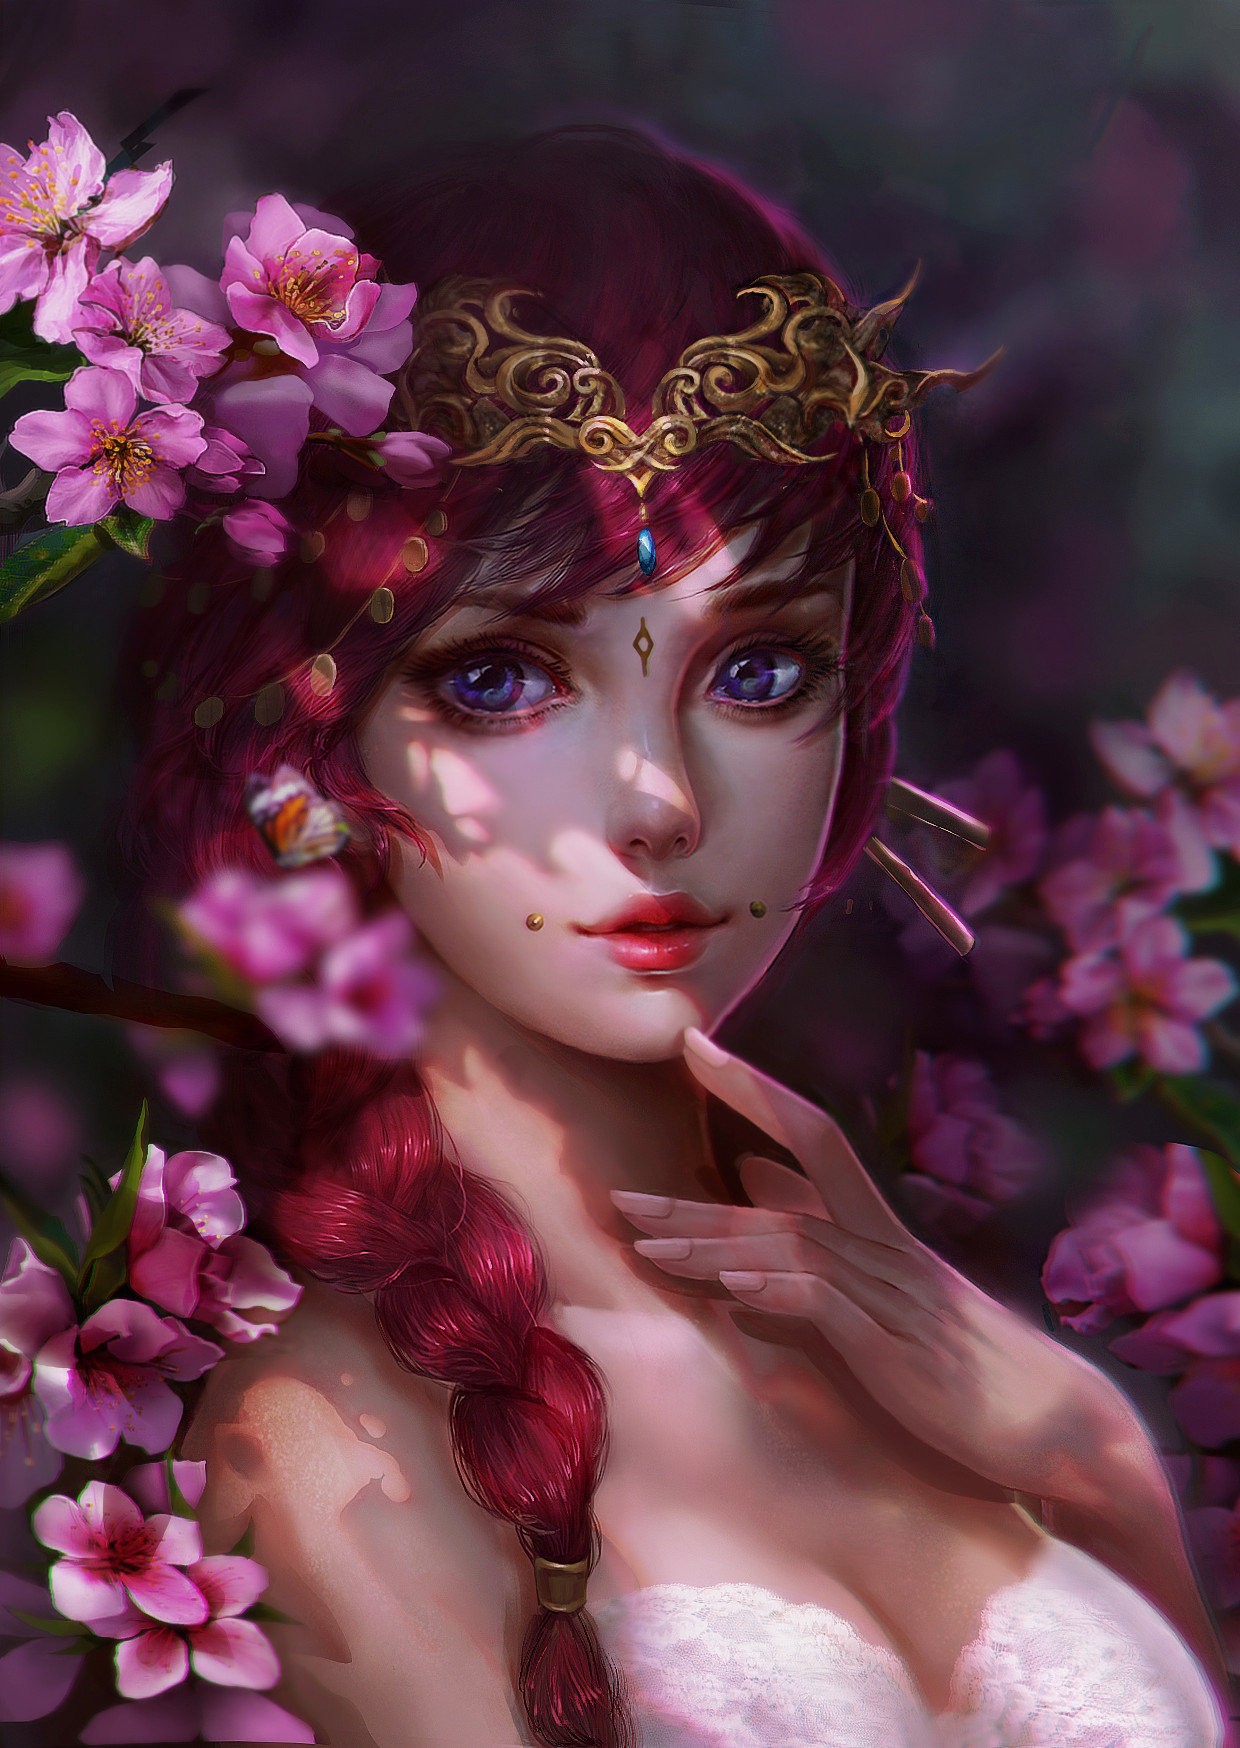 General 1240x1748 artwork fantasy girl flowers fantasy art face portrait red lipstick purple eyes women redhead long hair plants pink flowers